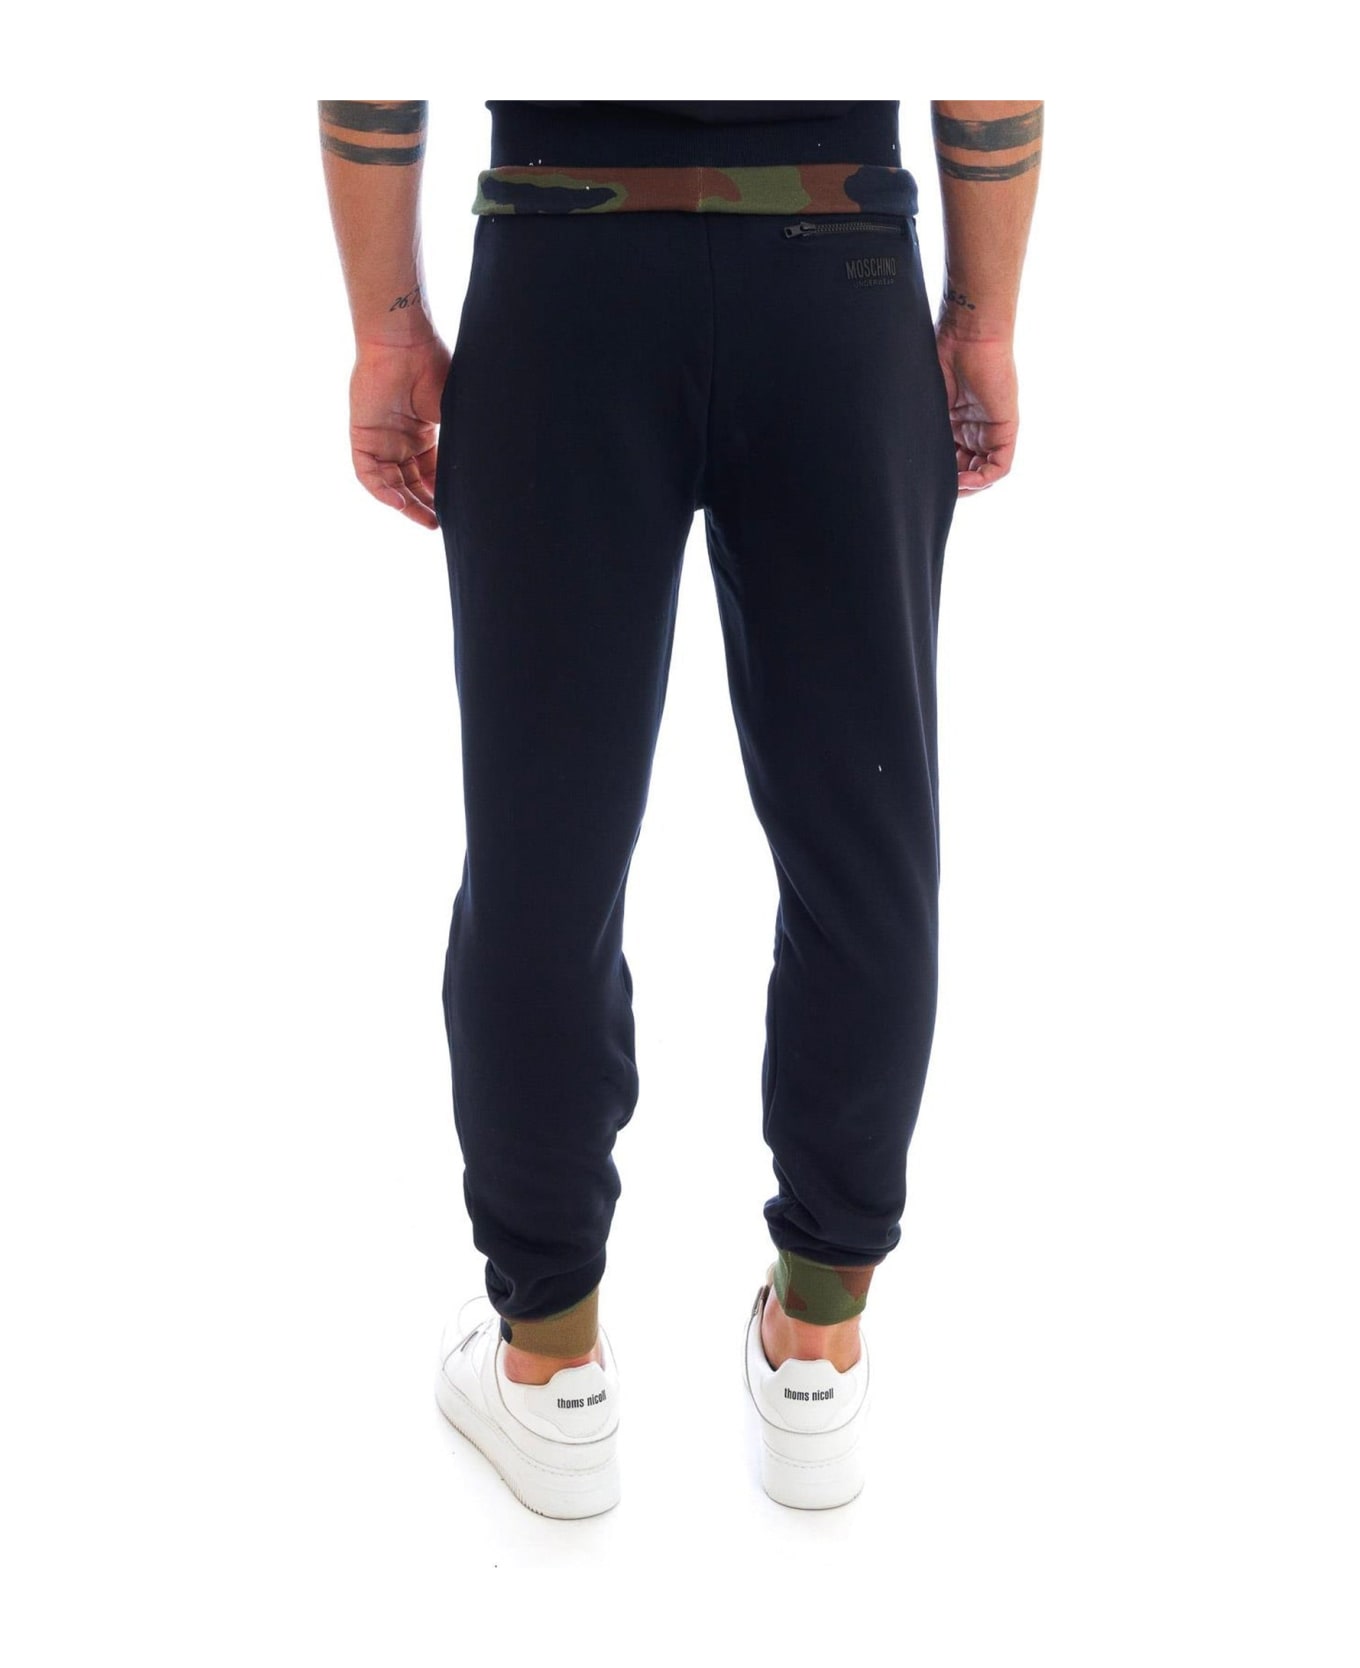 Moschino Underwear Jogging Style Pants - Black スウェットパンツ